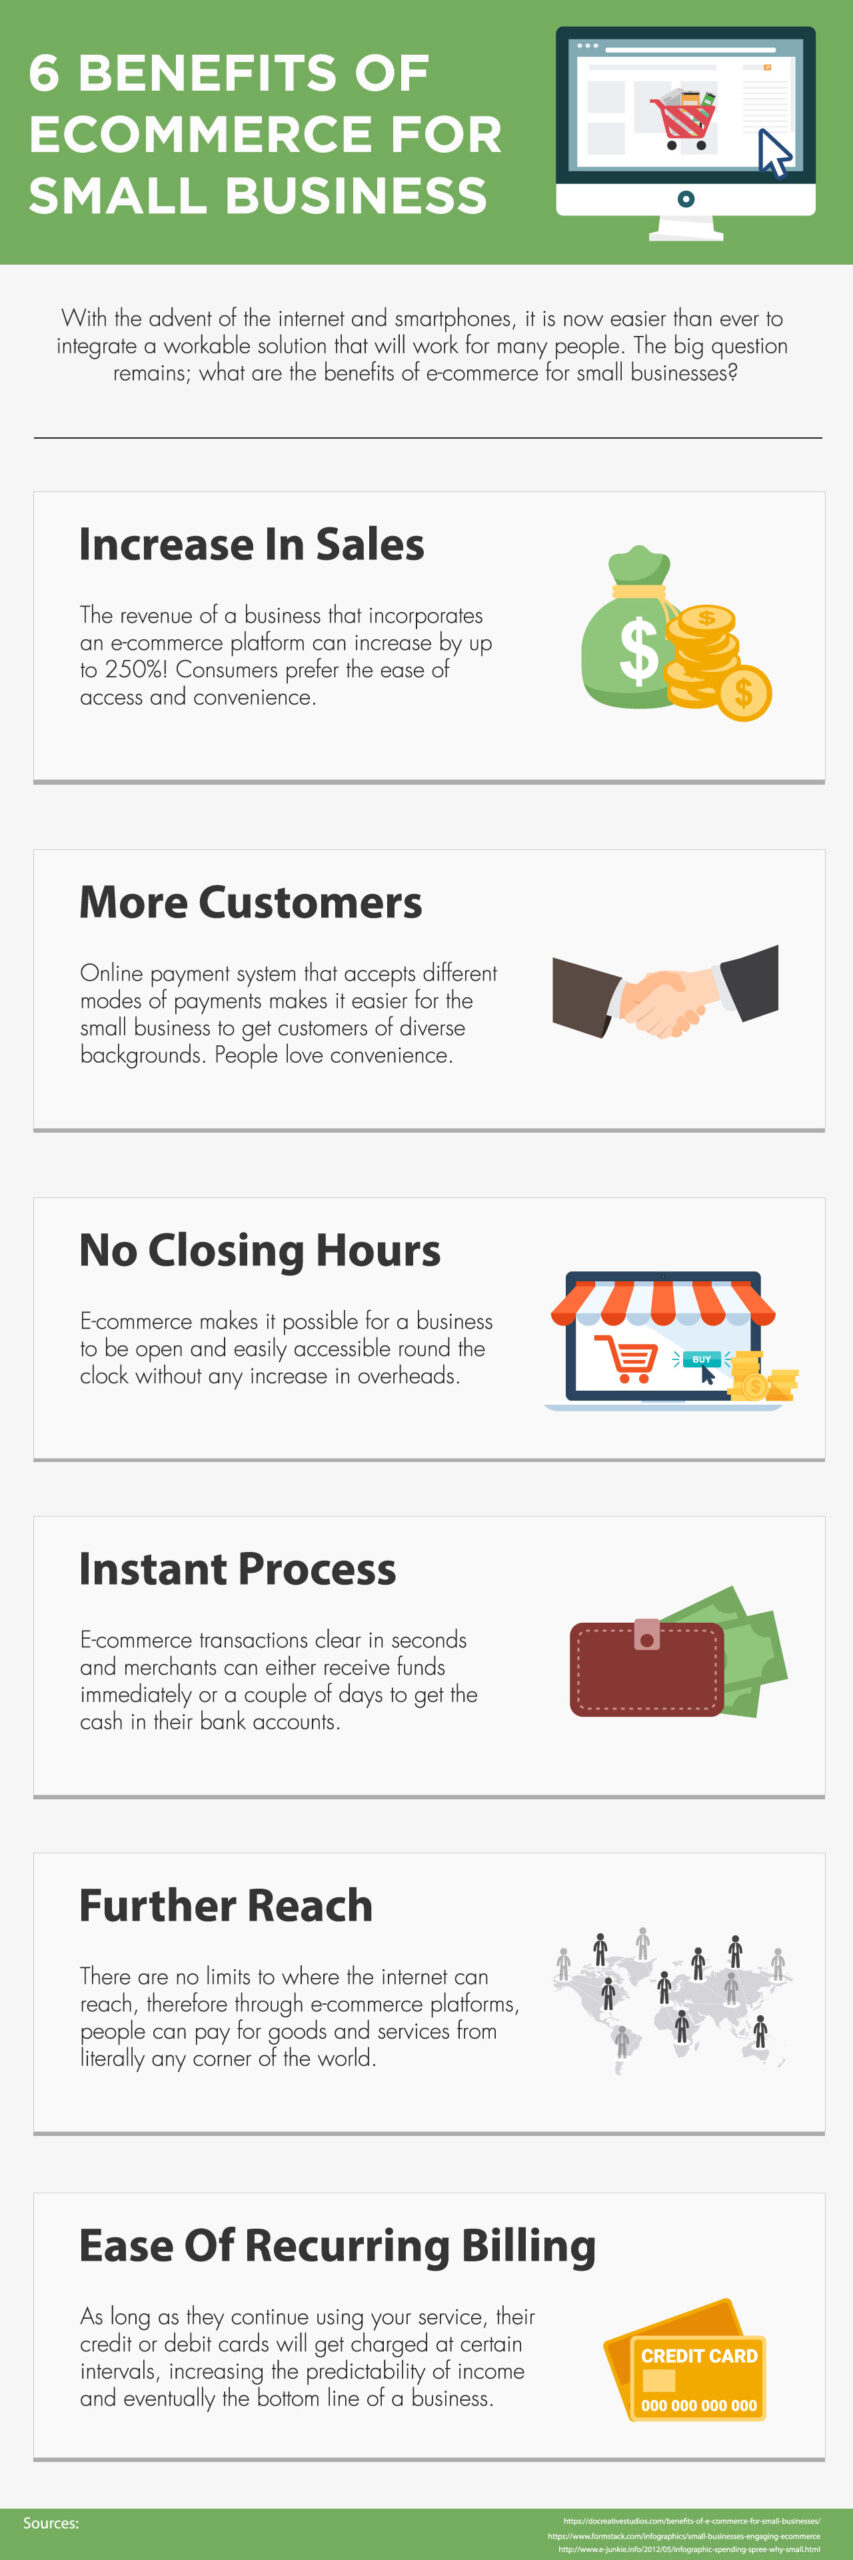 6 Benefits of eCommerce